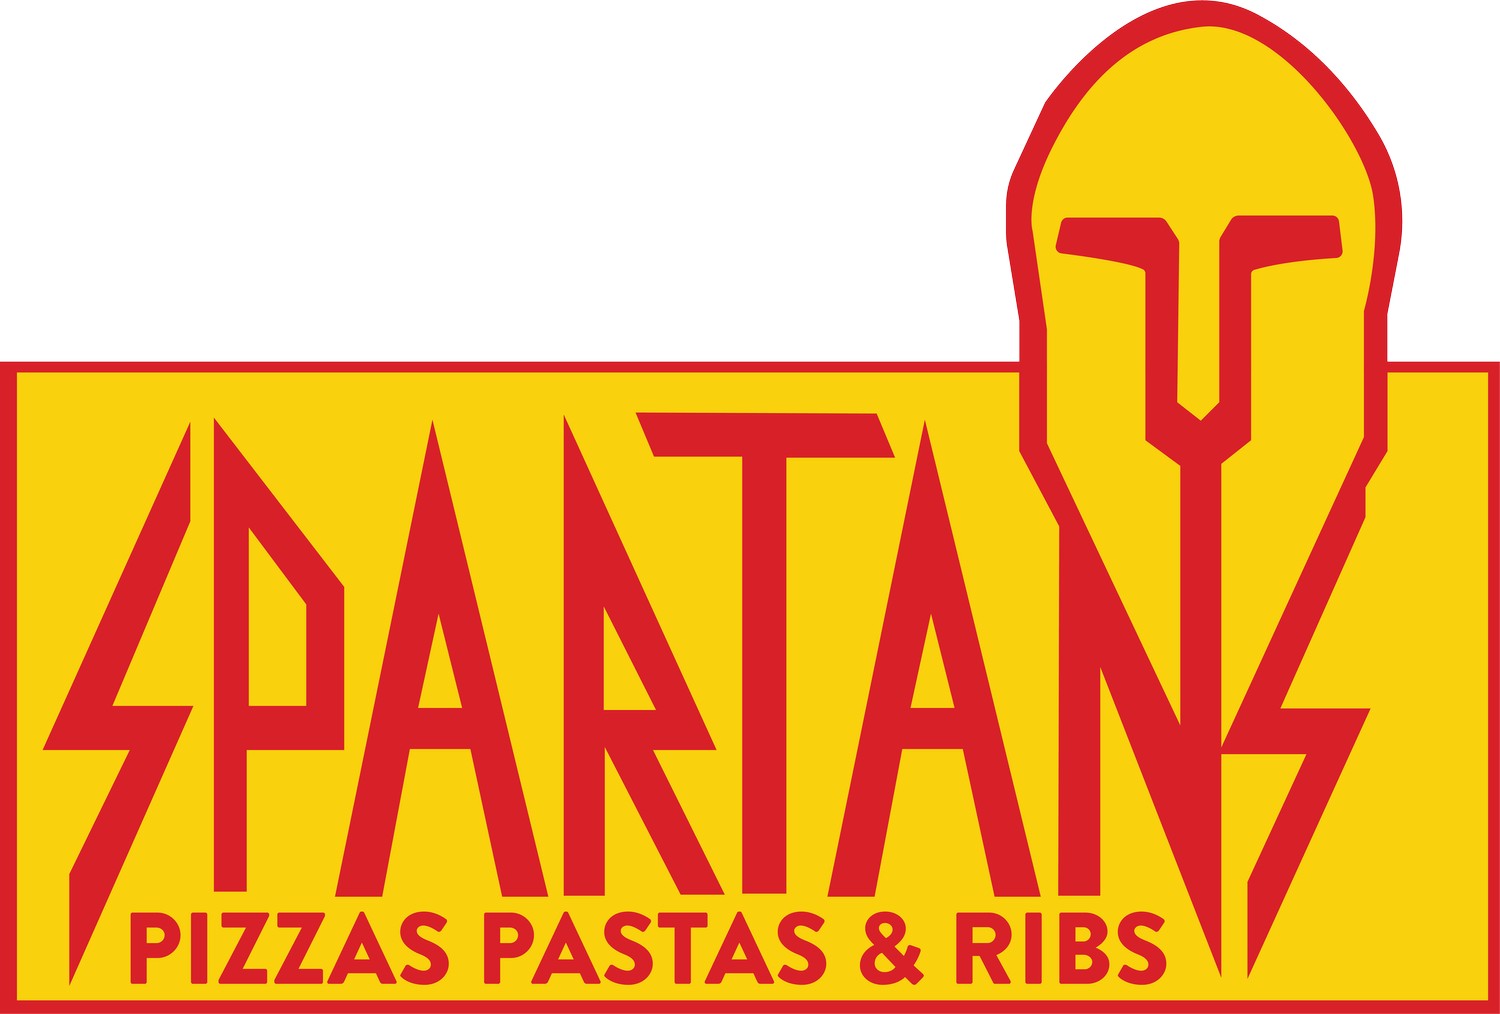 Spartans Pizzas, Pastas &amp; Ribs